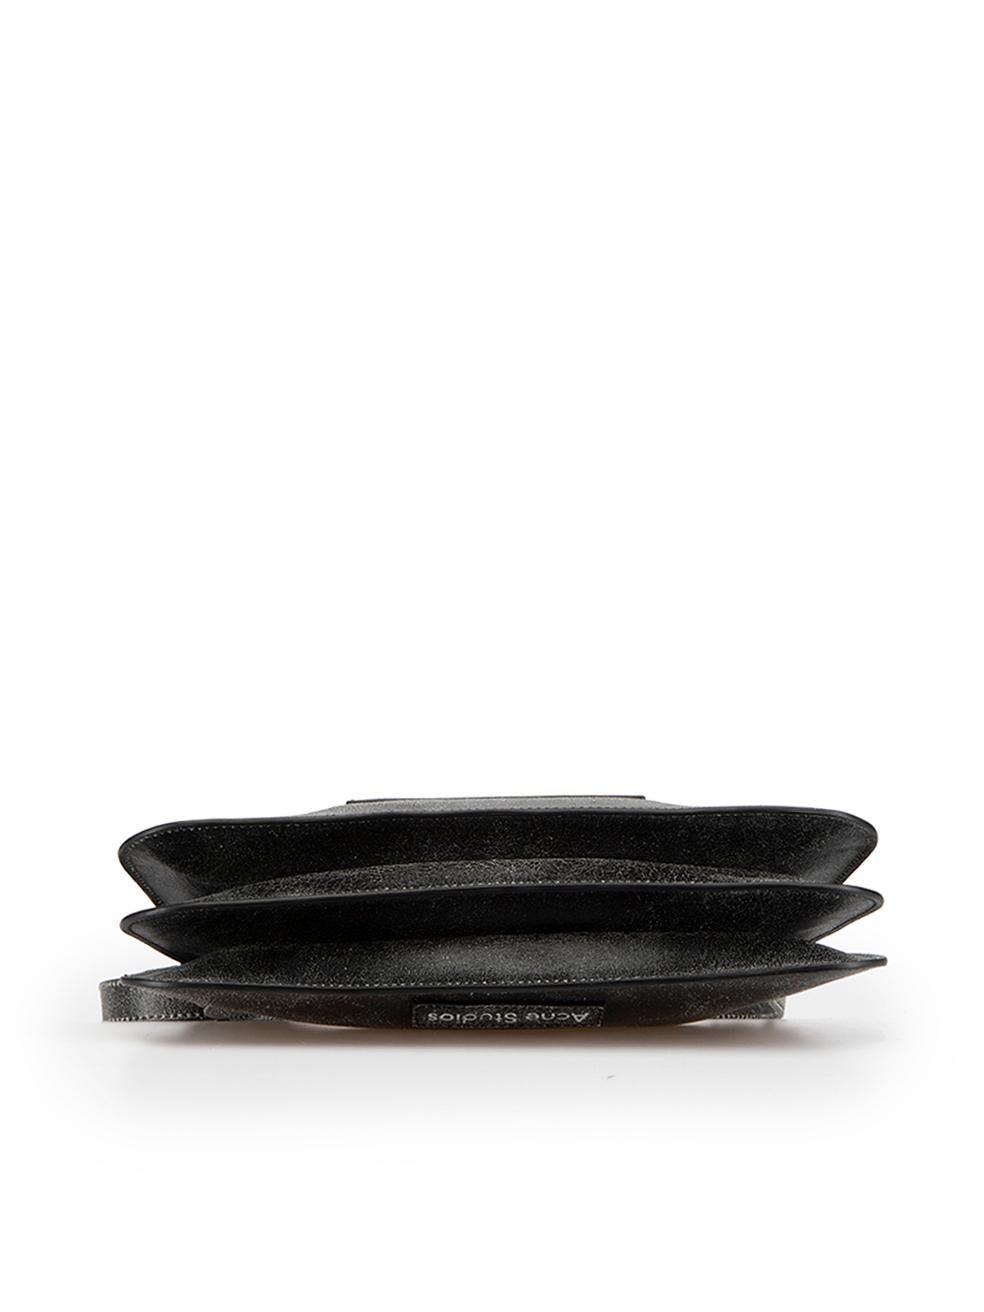 Acne Studios Women's Black Leather Platt Mini Shoulder Bag 1